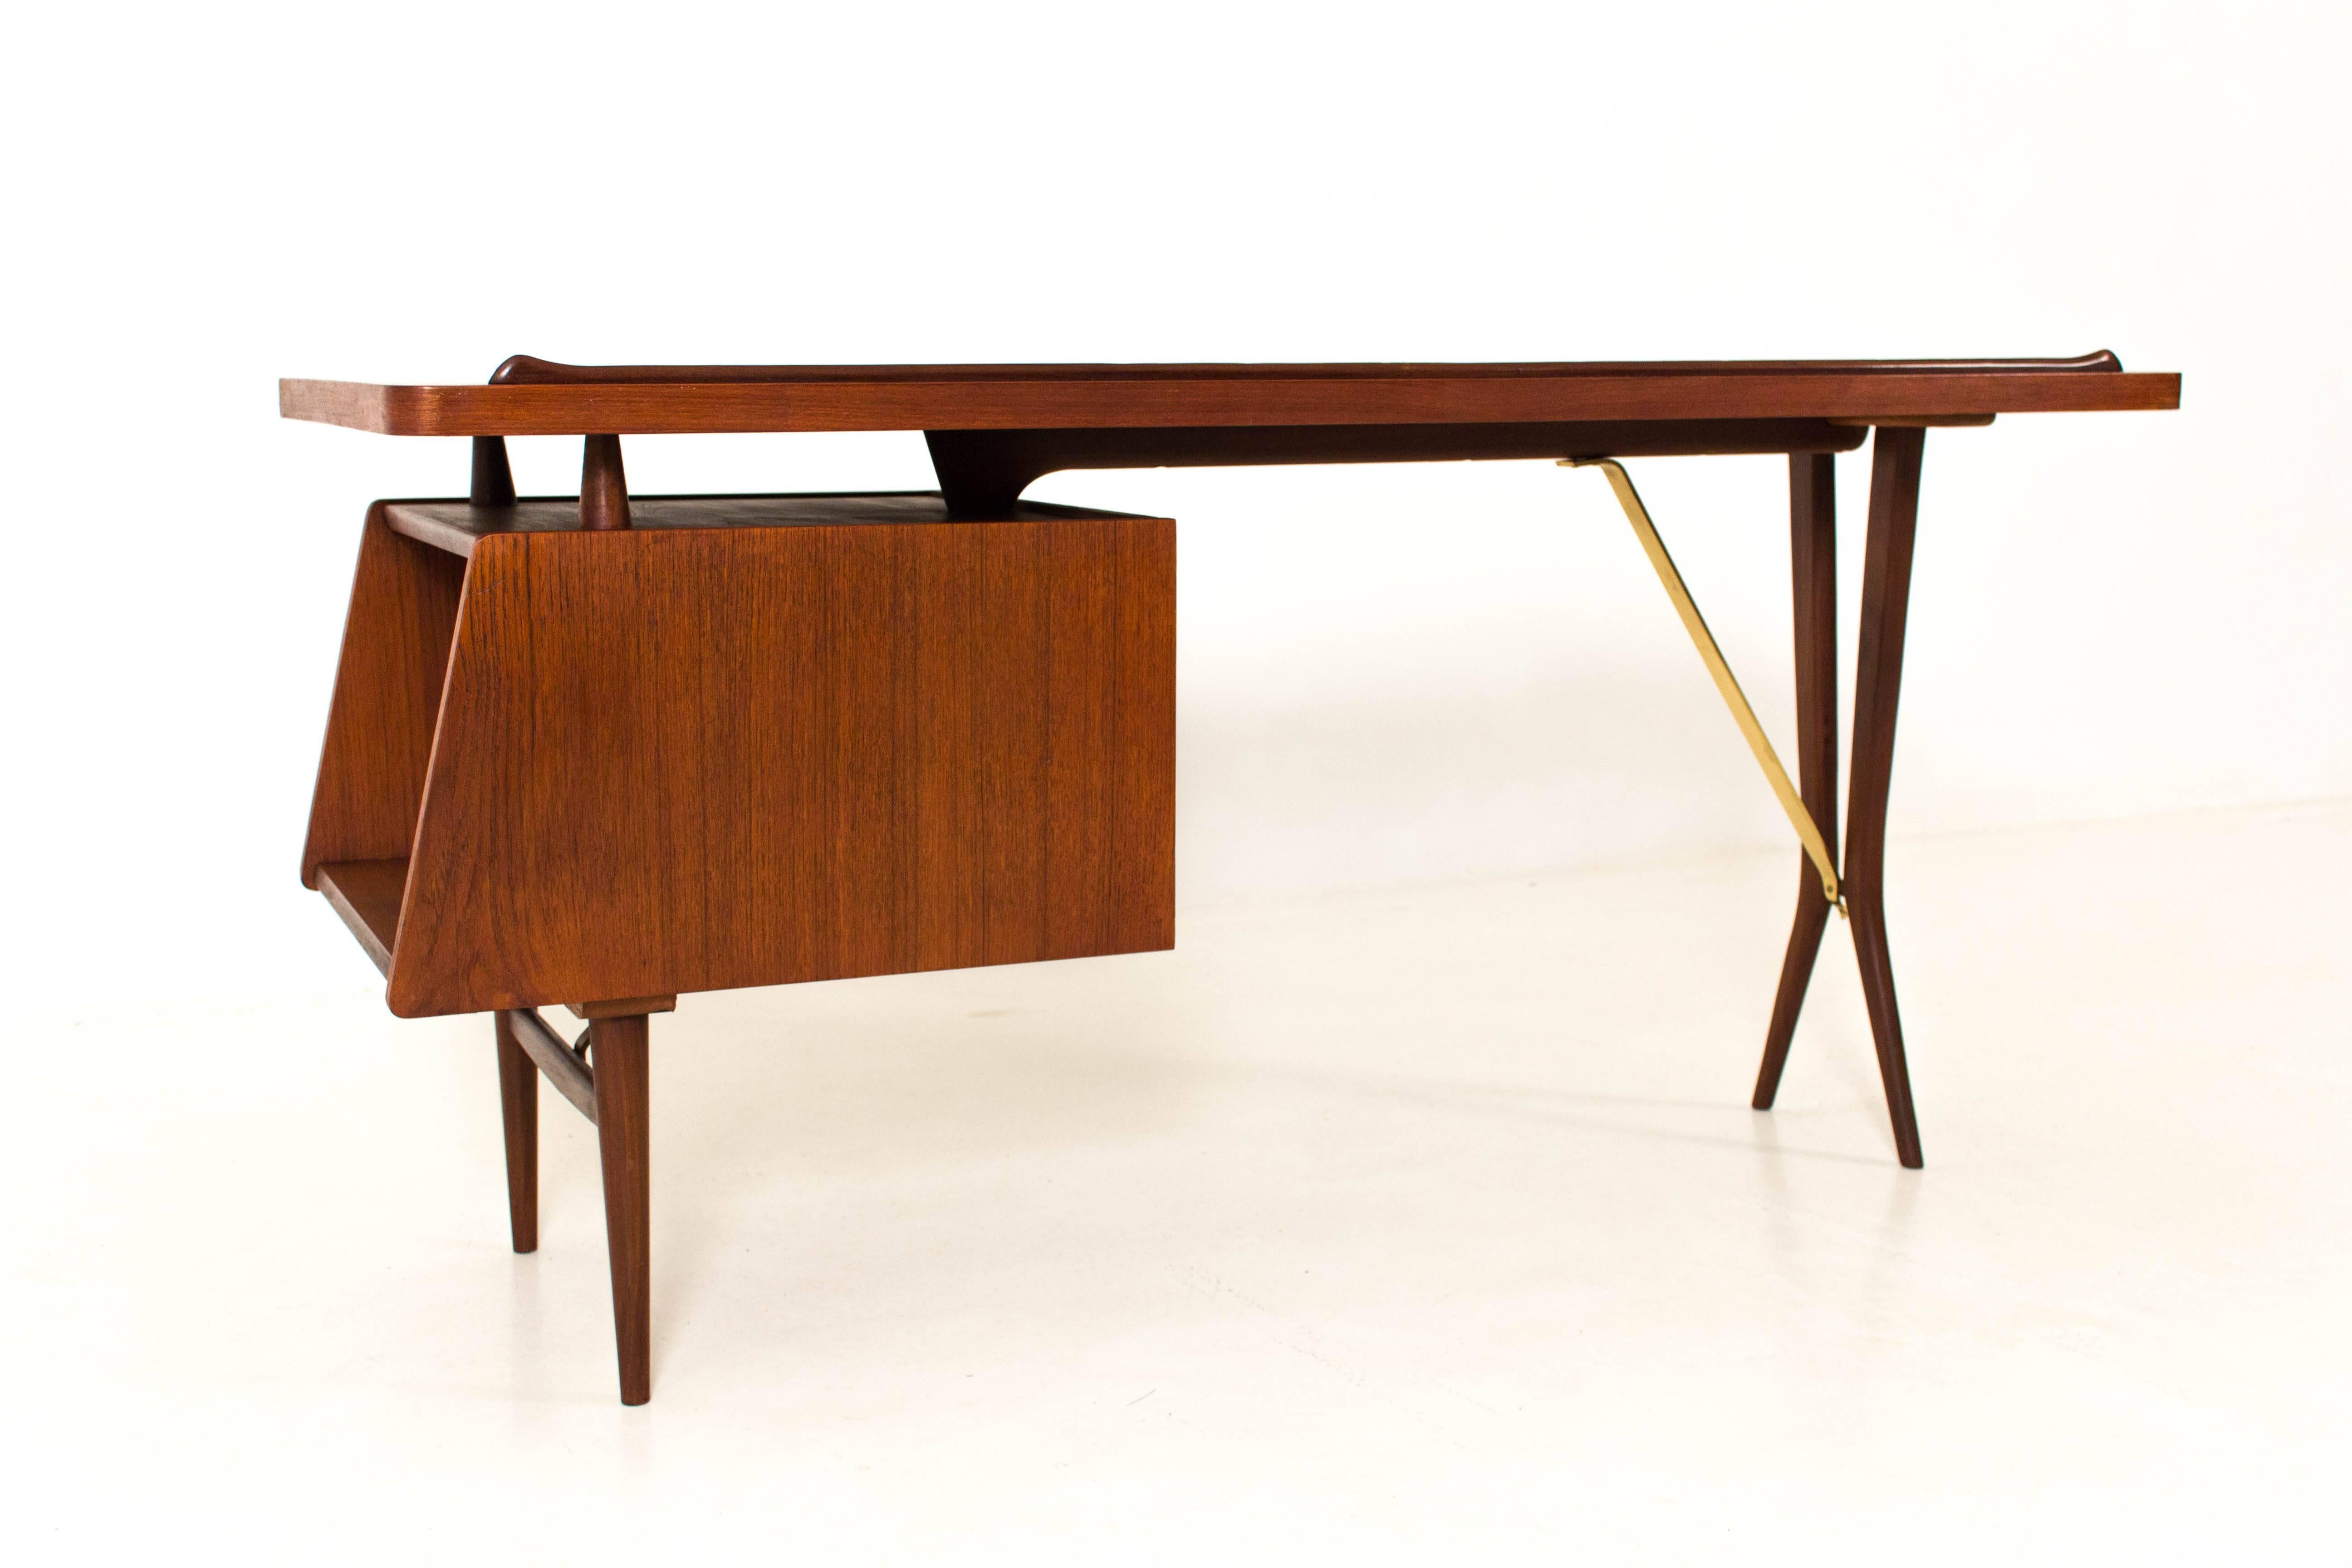 Teak Iconic Mid-Century Modern Desk by Louis Van Teeffelen for Webe, 1959